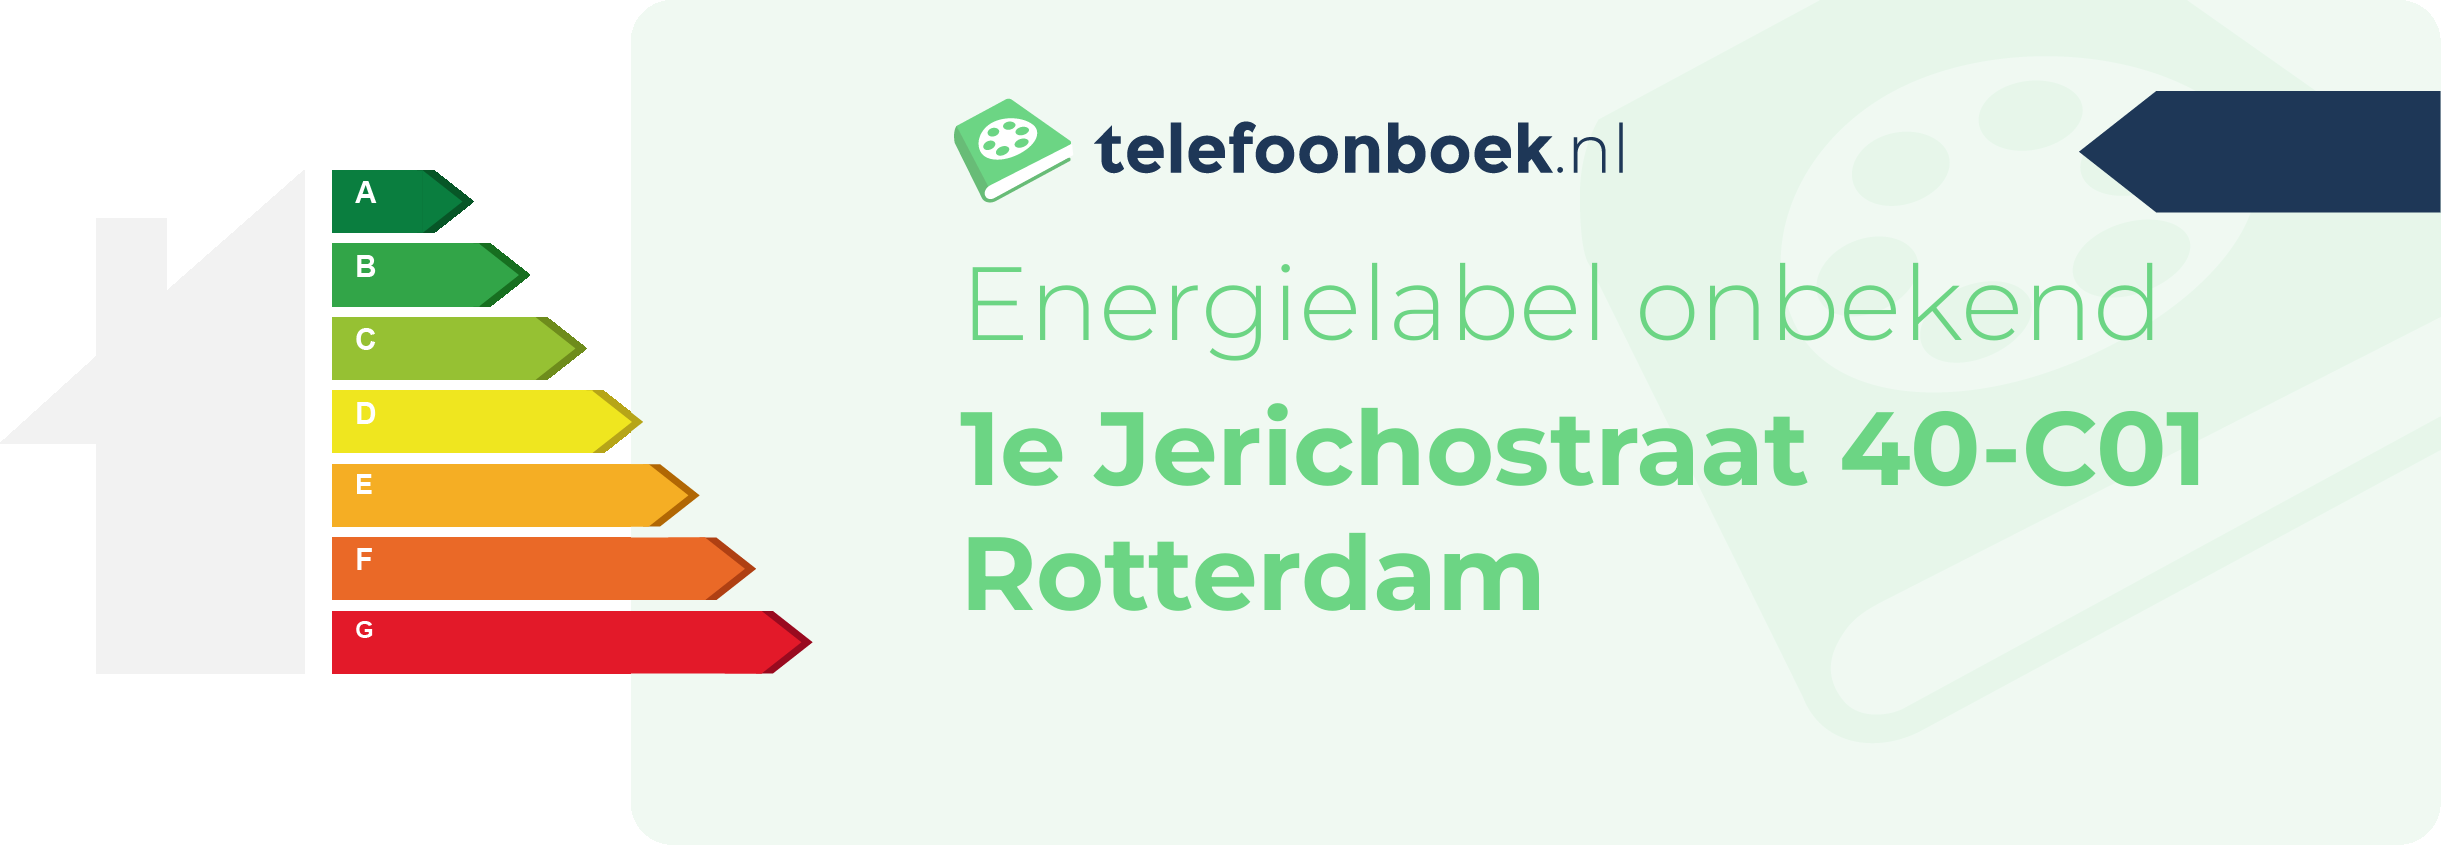 Energielabel 1e Jerichostraat 40-C01 Rotterdam